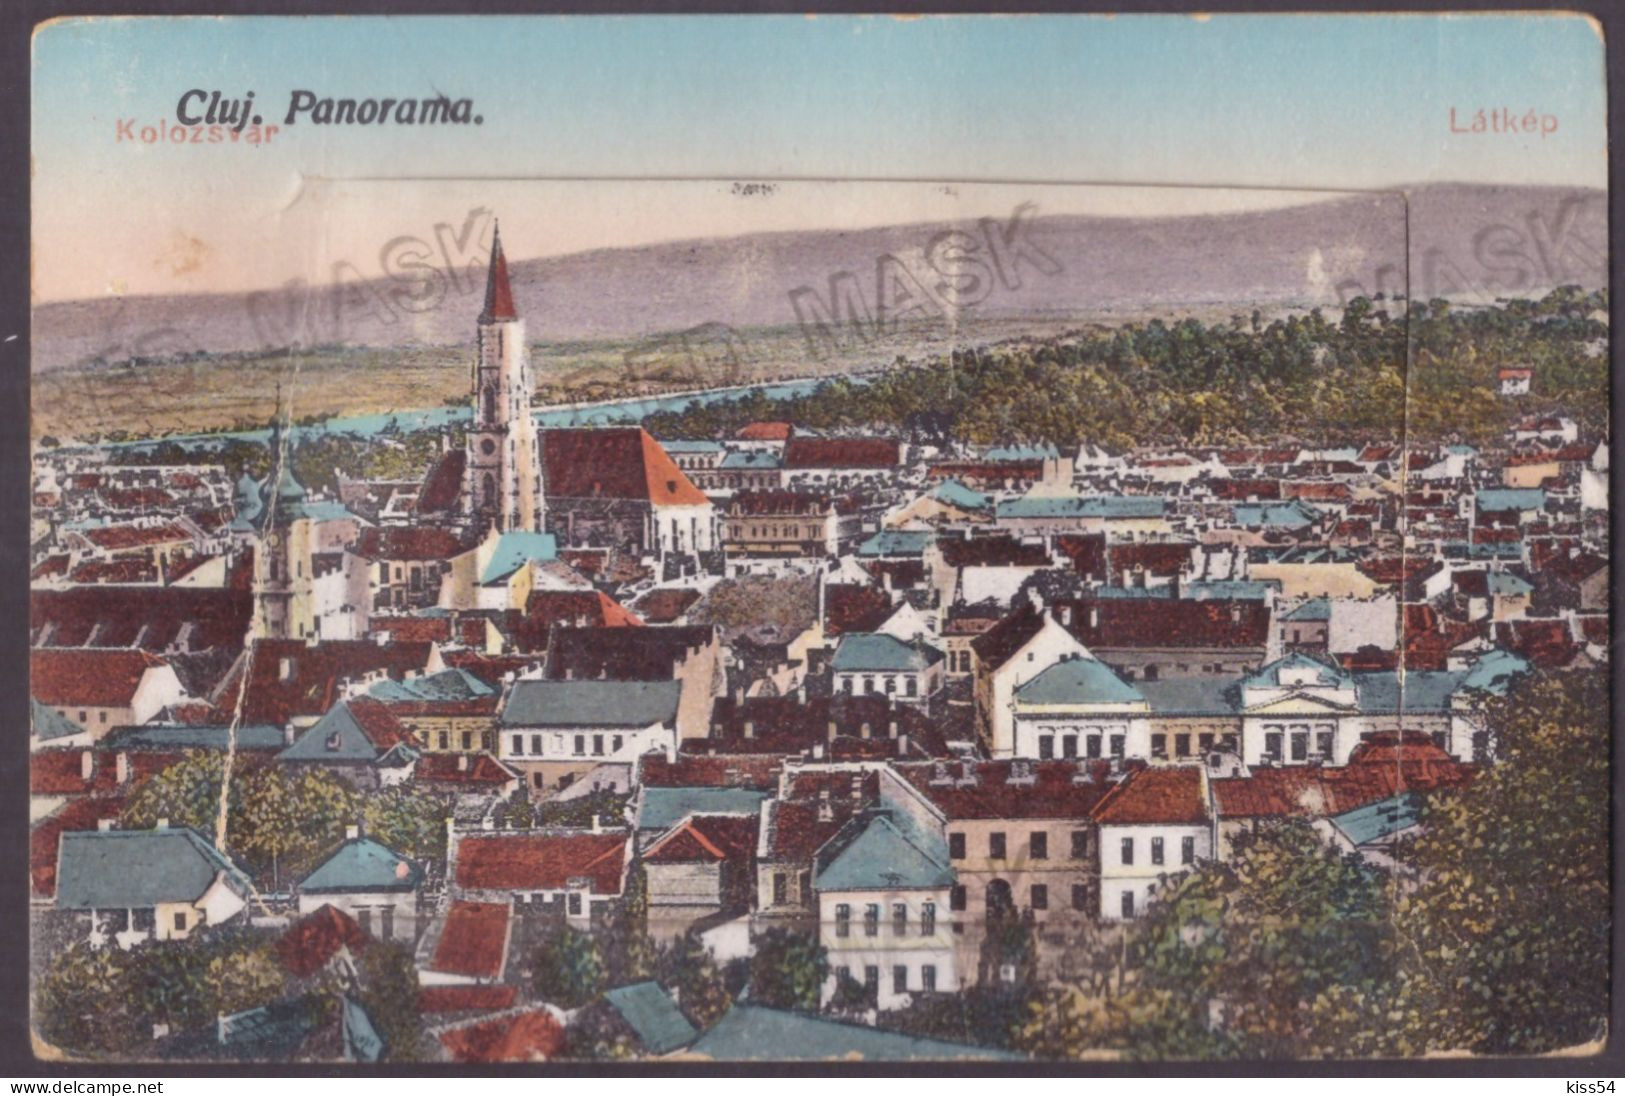 RO 86 - 24404 CLUJ, Panorama, Leporello, Romania - Old Postcard + 10 Mini Photocards - Unused - Romania